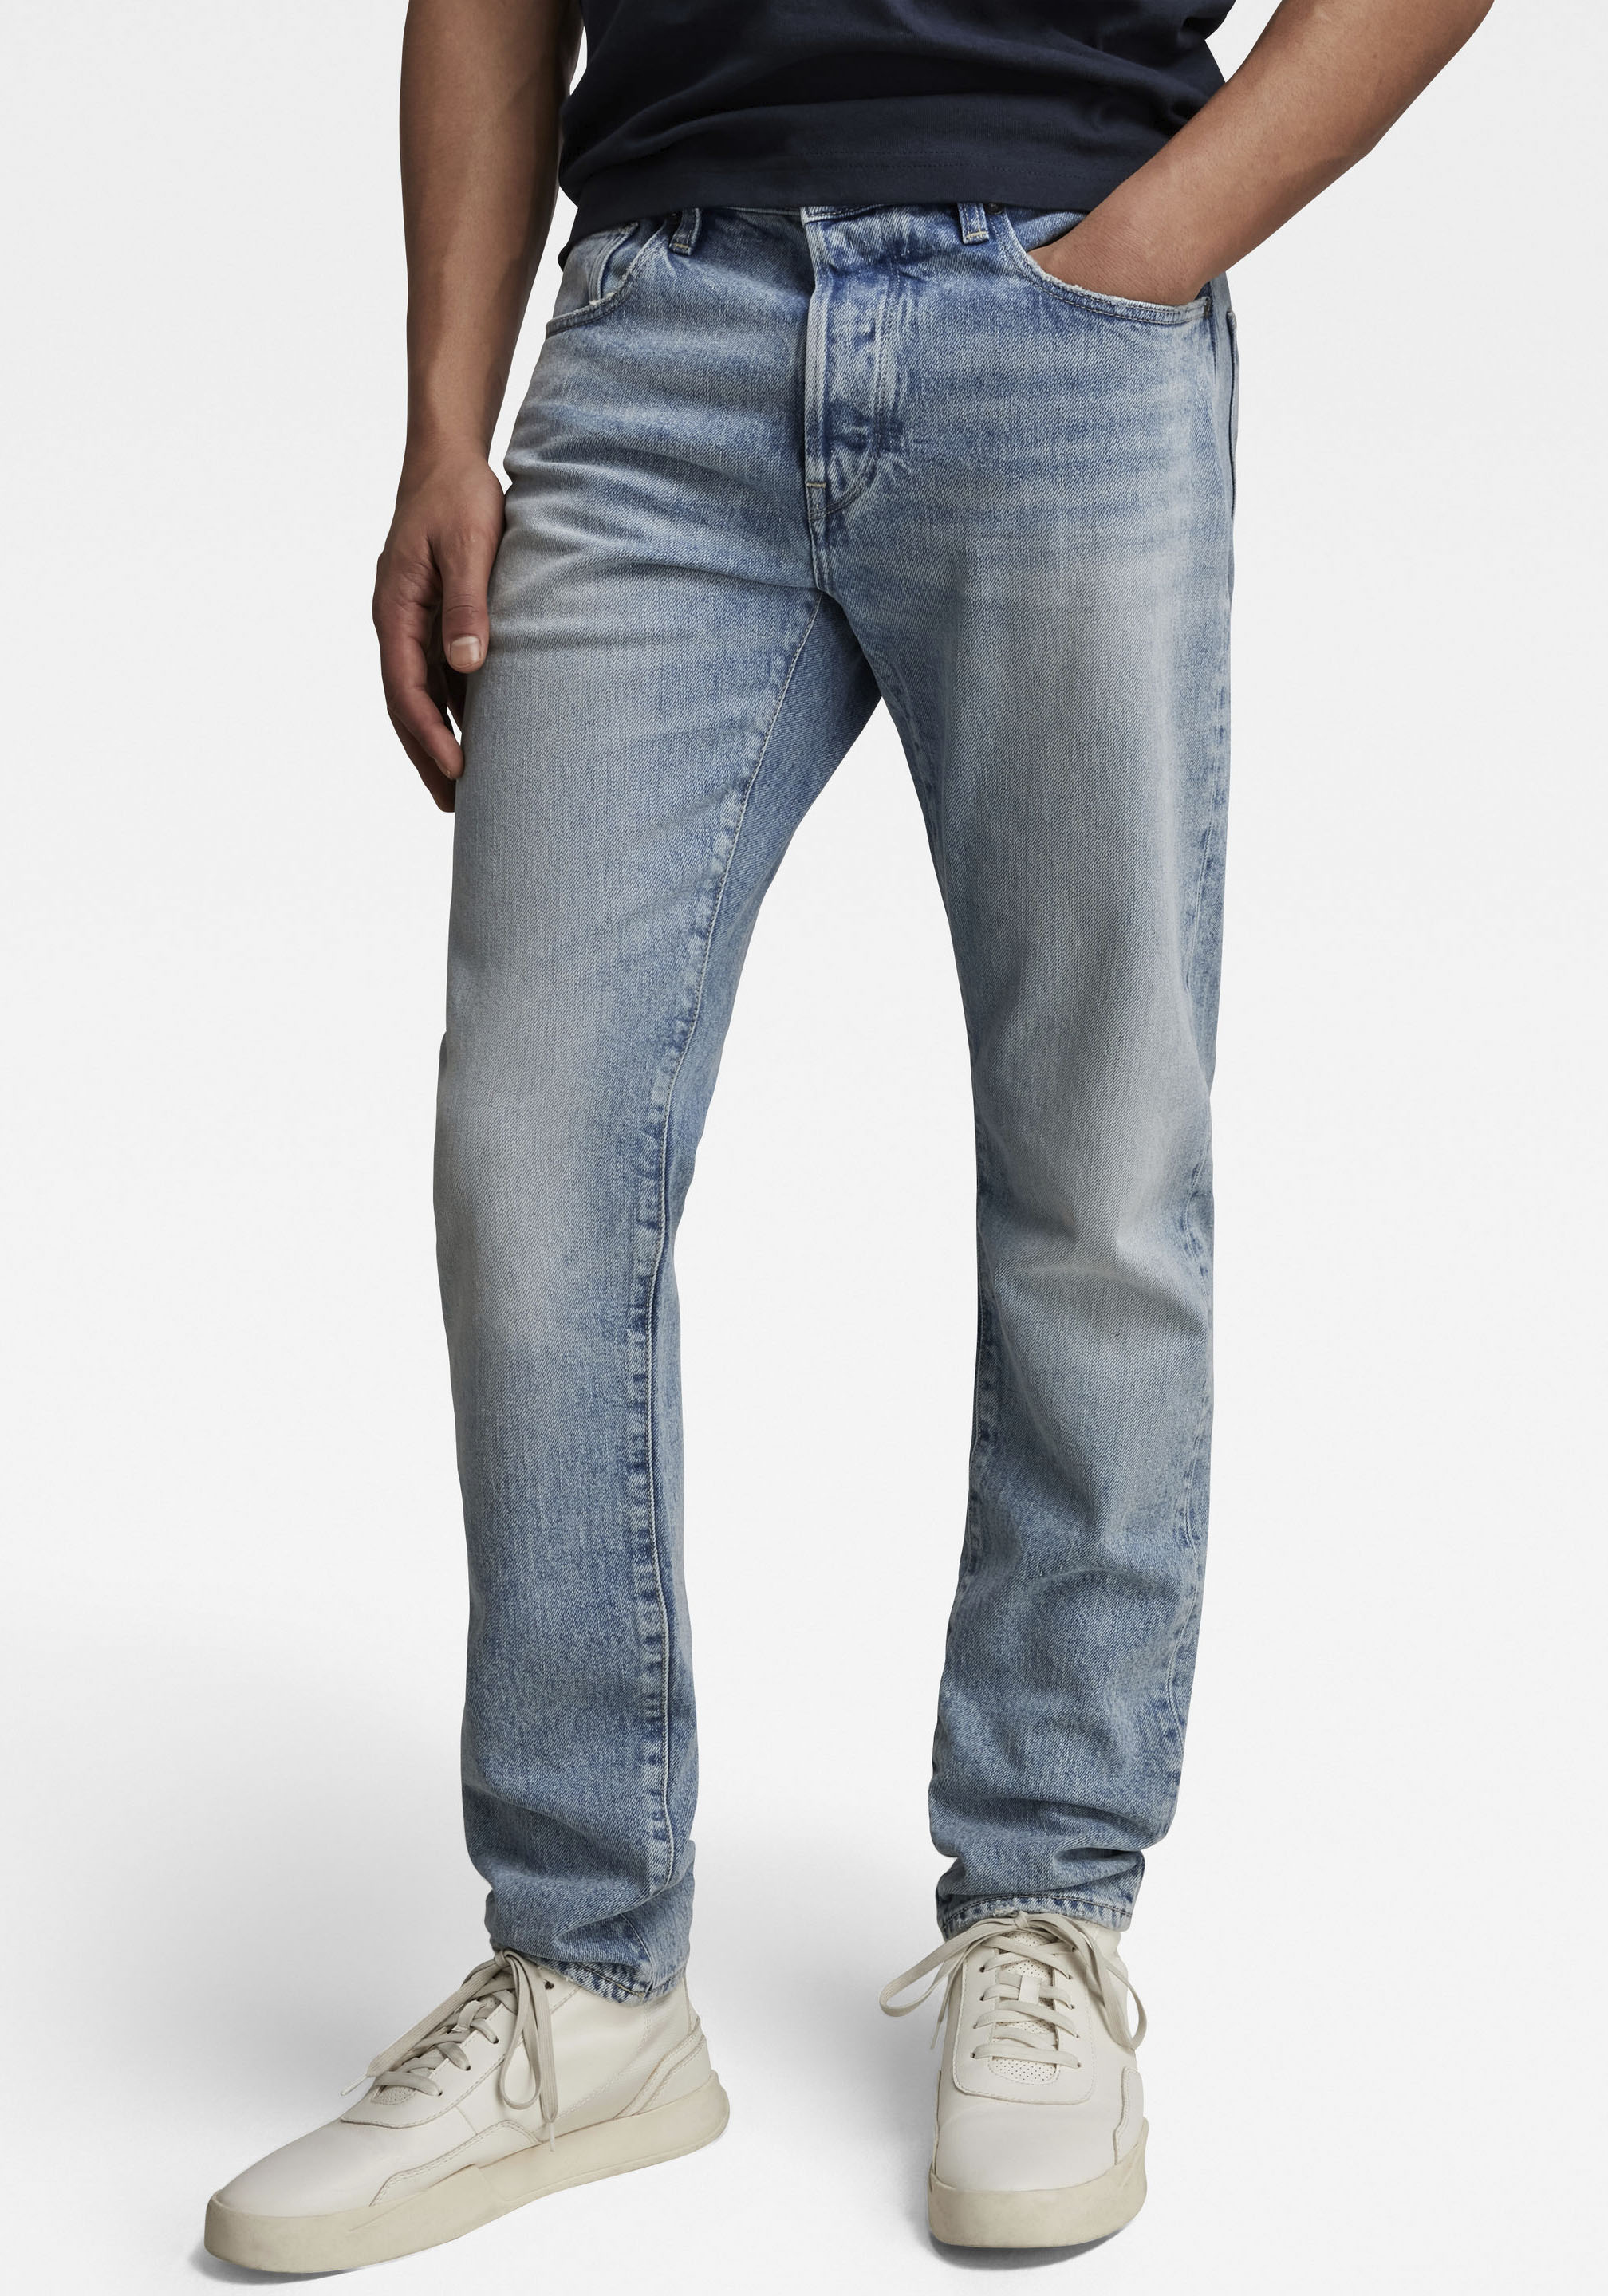 G-STAR RAW Herren 3301-slim Jeans, Blau (Dk Aged 5245-89), 28W/30L